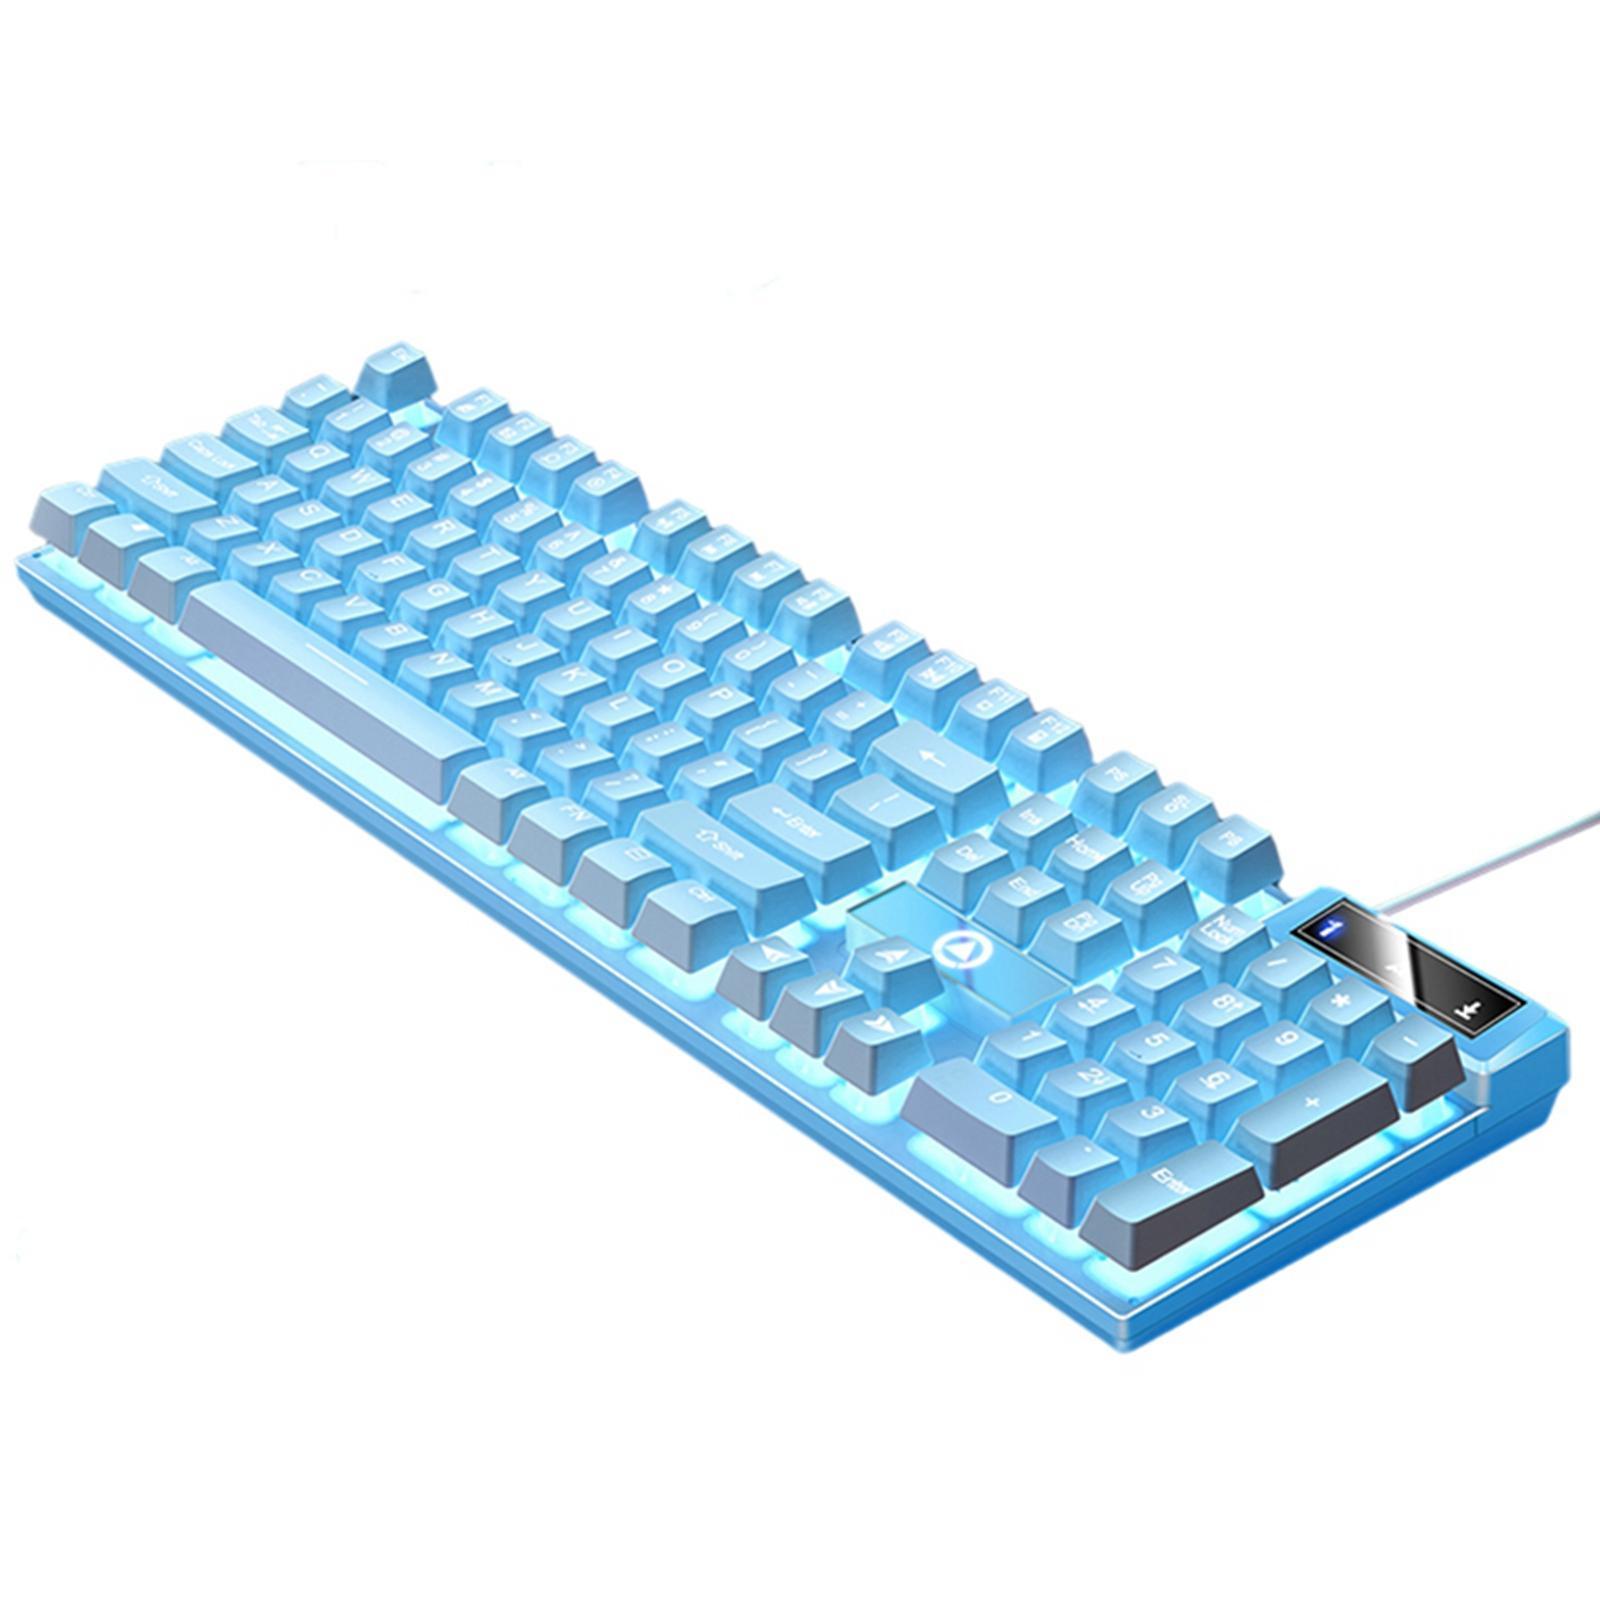 Mechanical Gaming Keyboard USB LED Lighting for Game Office